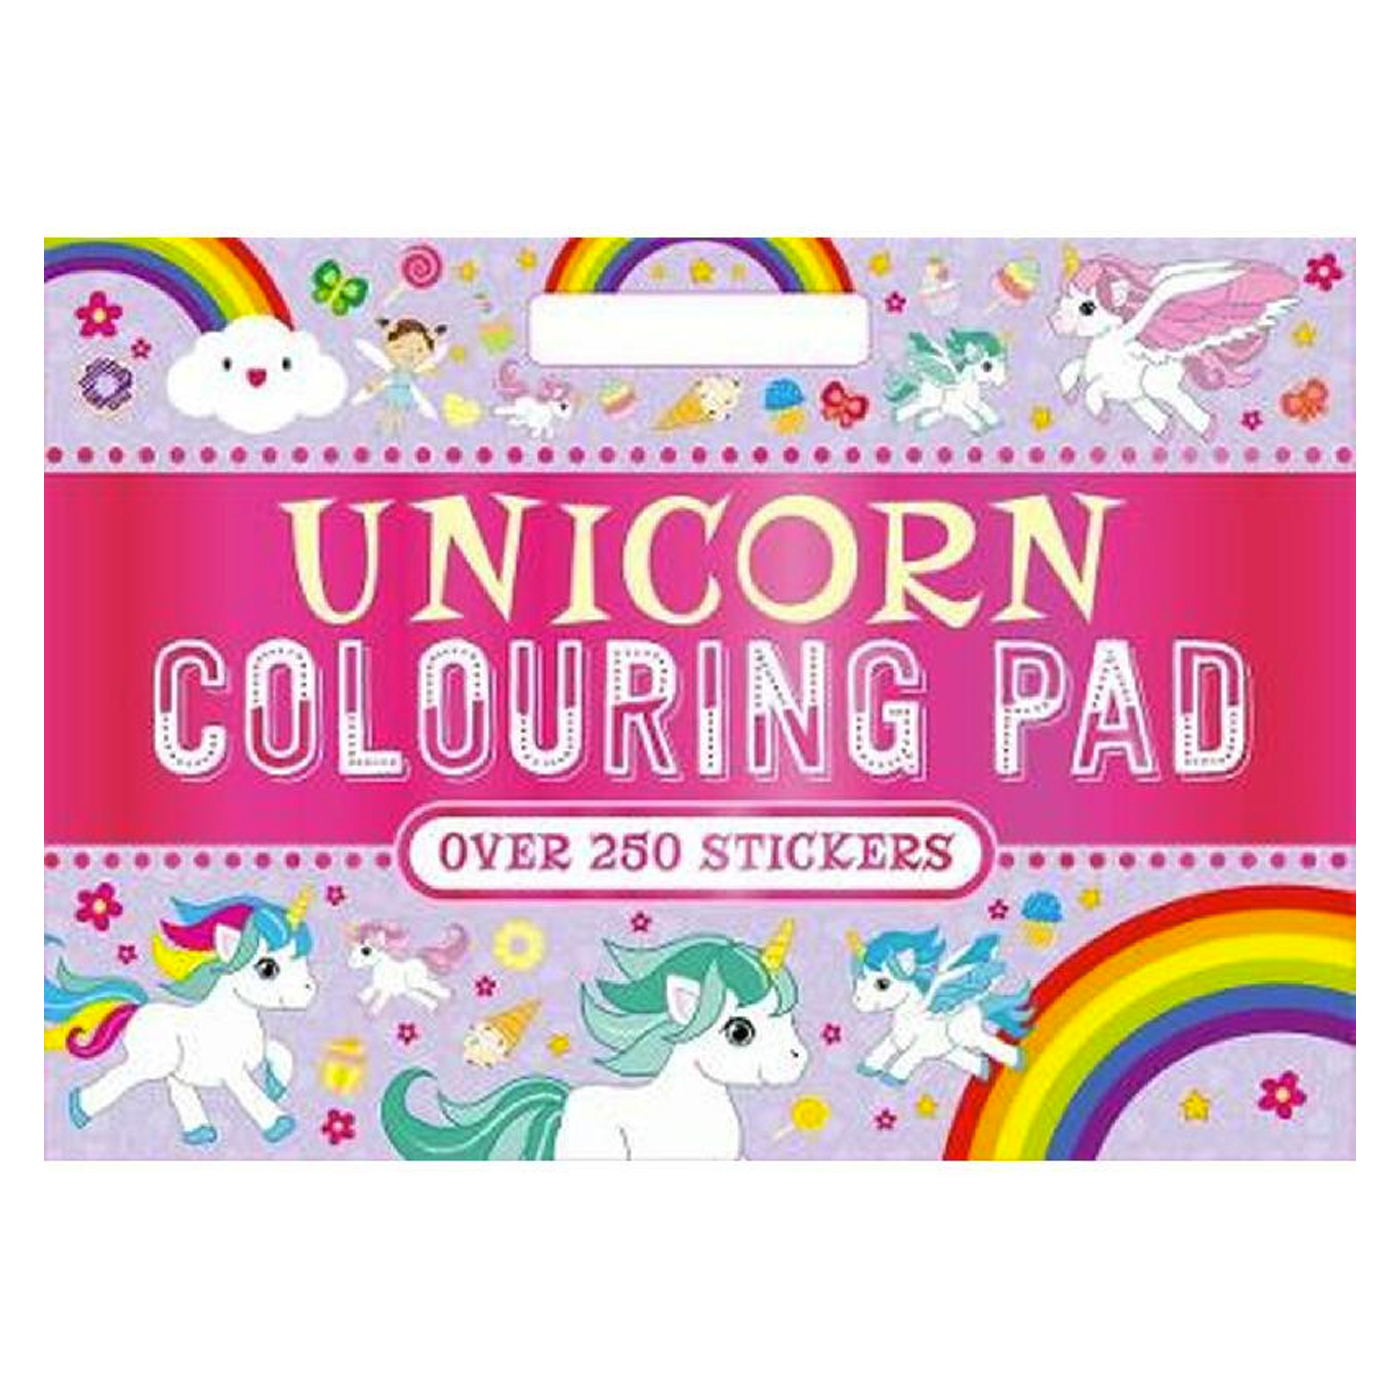  Unicorn Colouring Pad